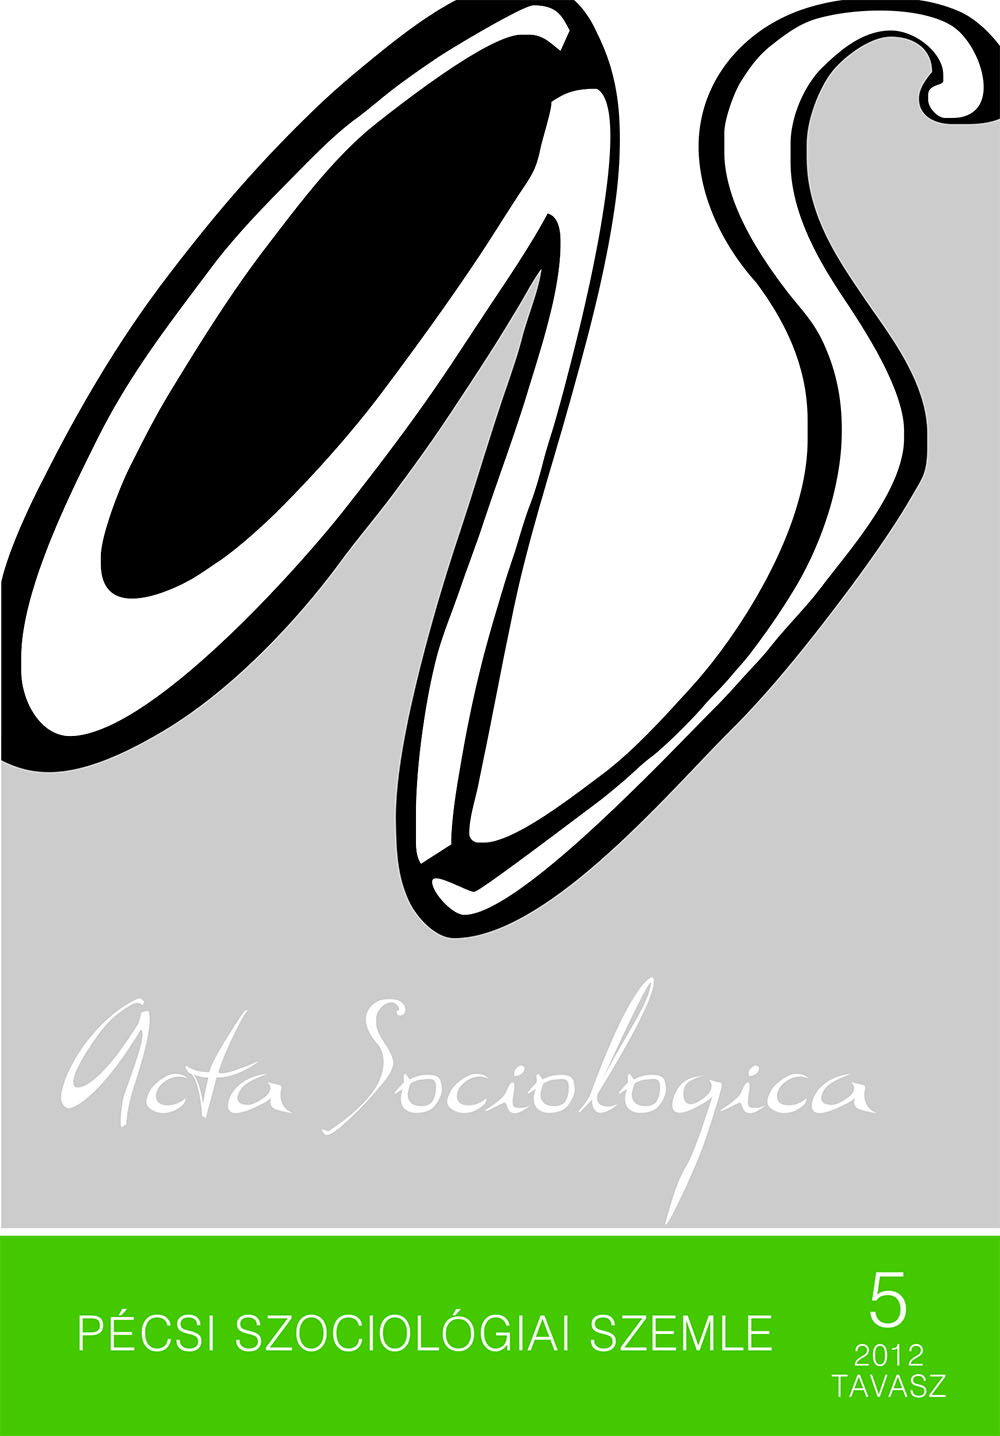 Acta Sociologica